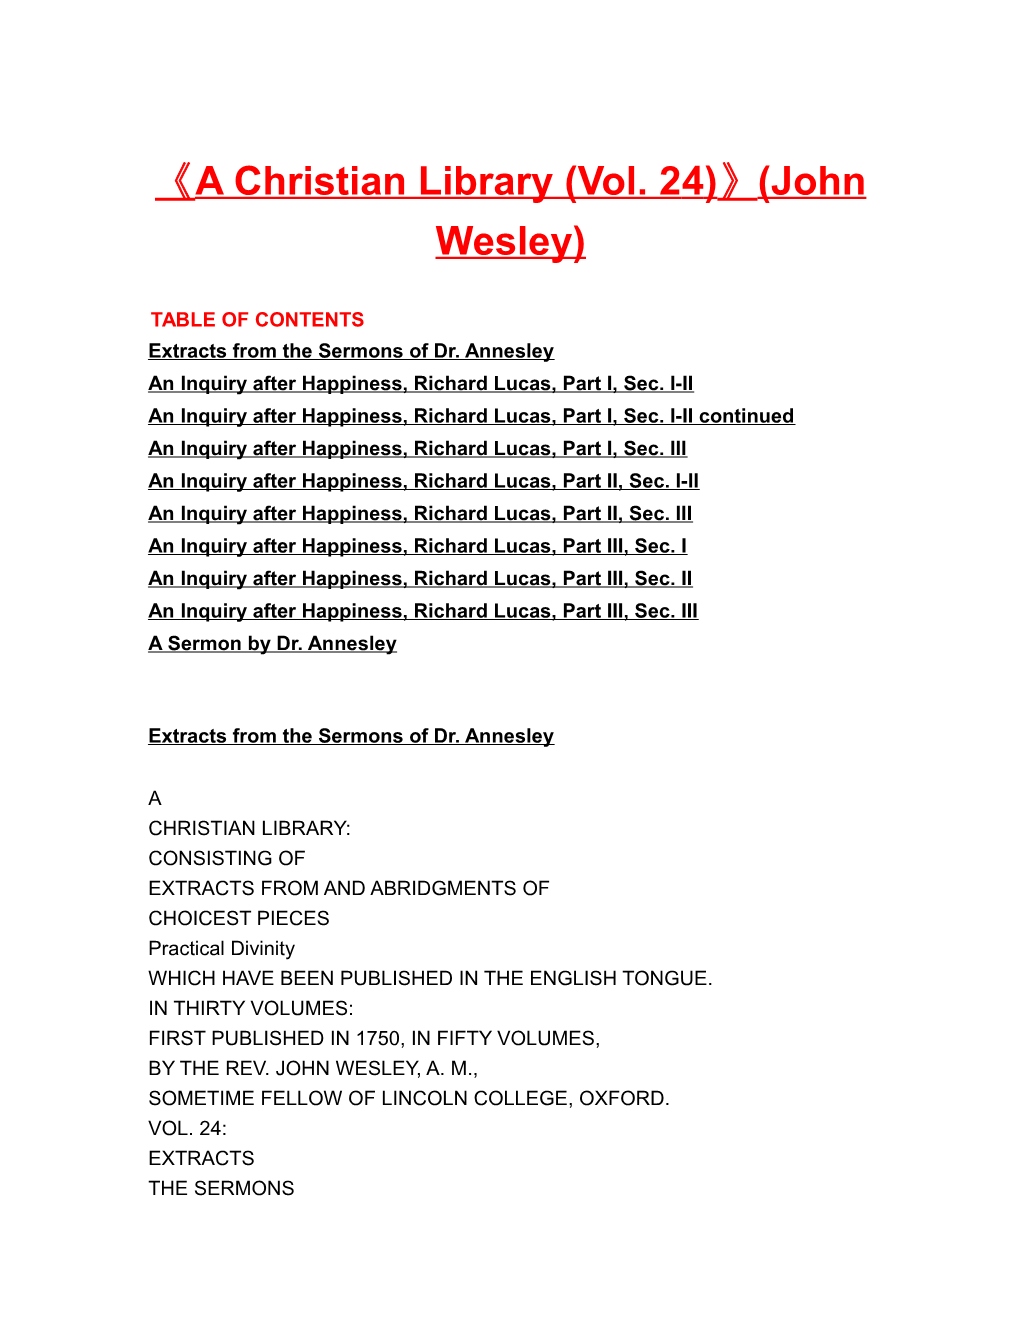 A Christian Library (Vol. 24) (John Wesley)